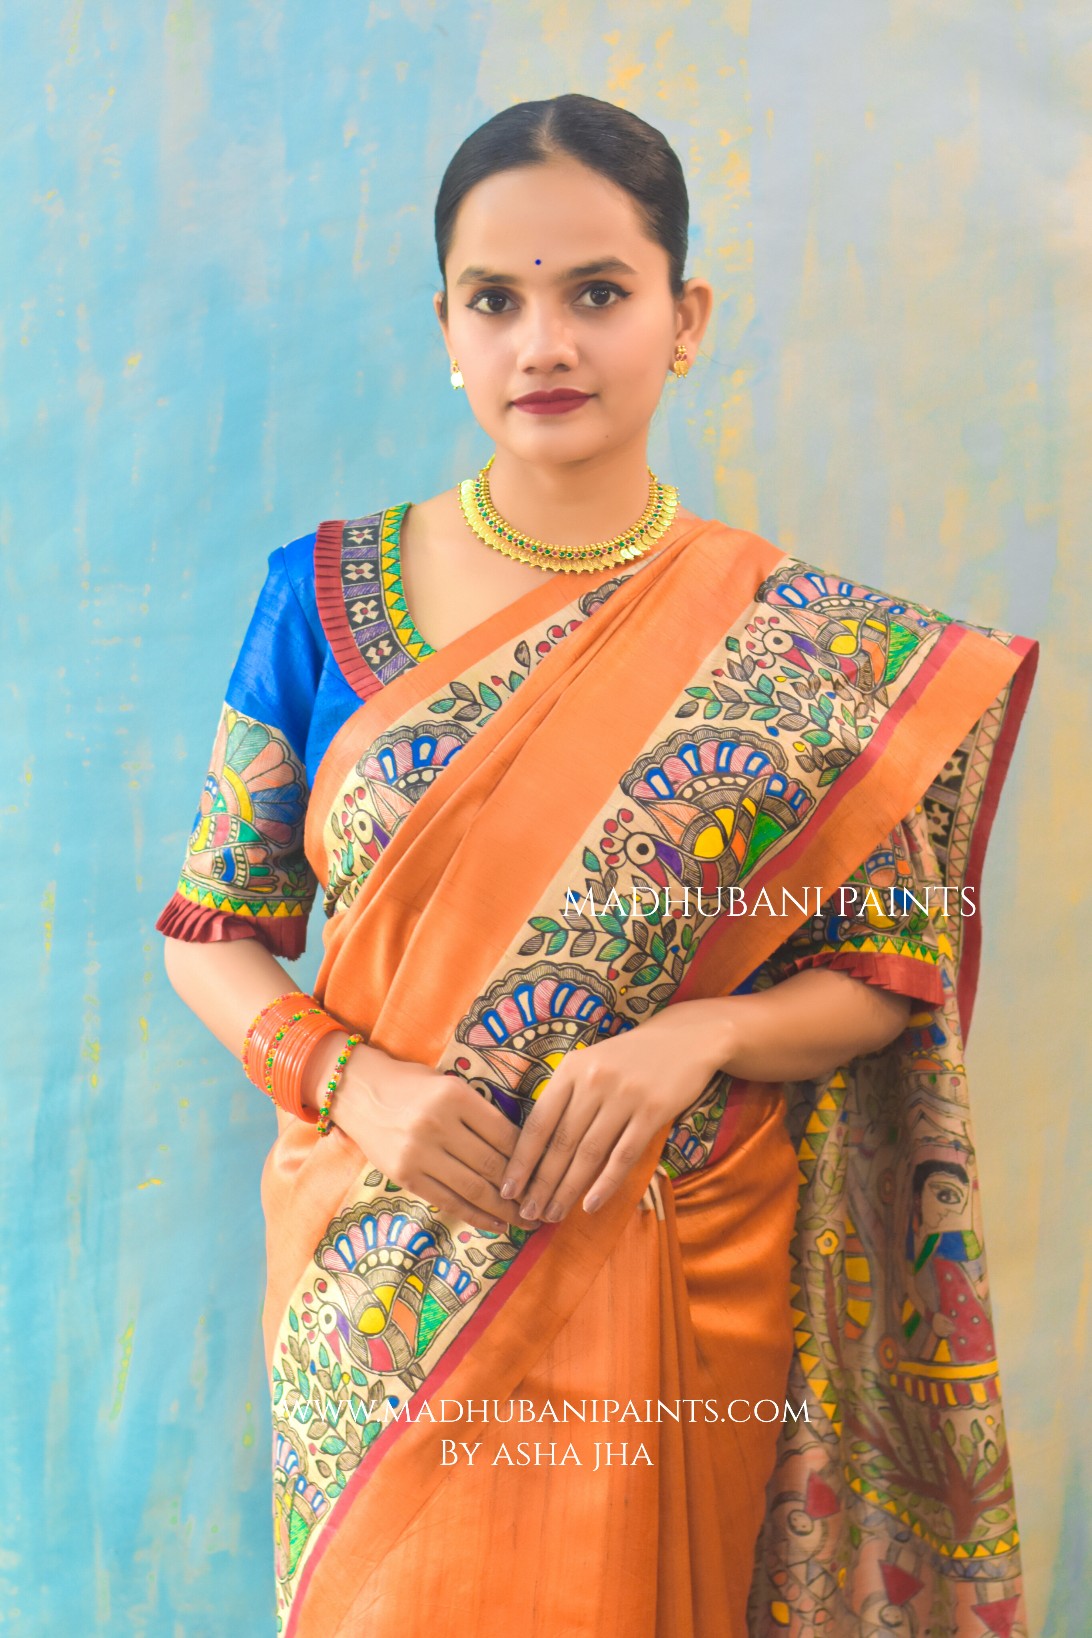 'NARANGI DOLI' Hand Painted  Madhubani Tussar Silk Blouse